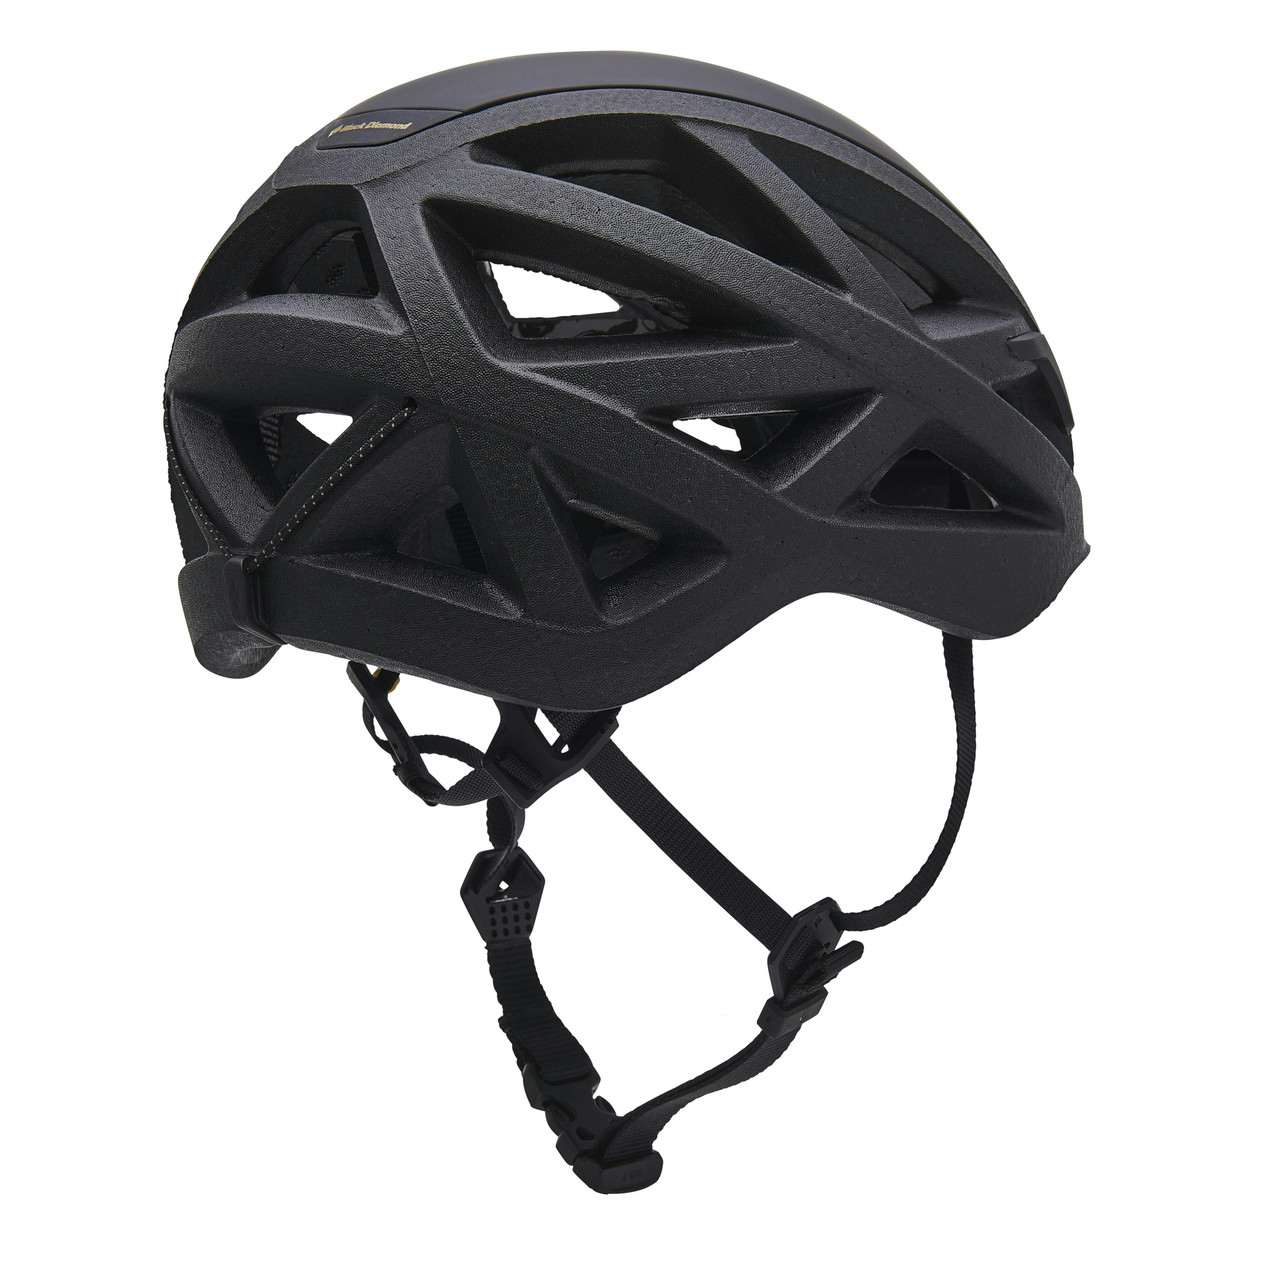 Vapor Helmet Black